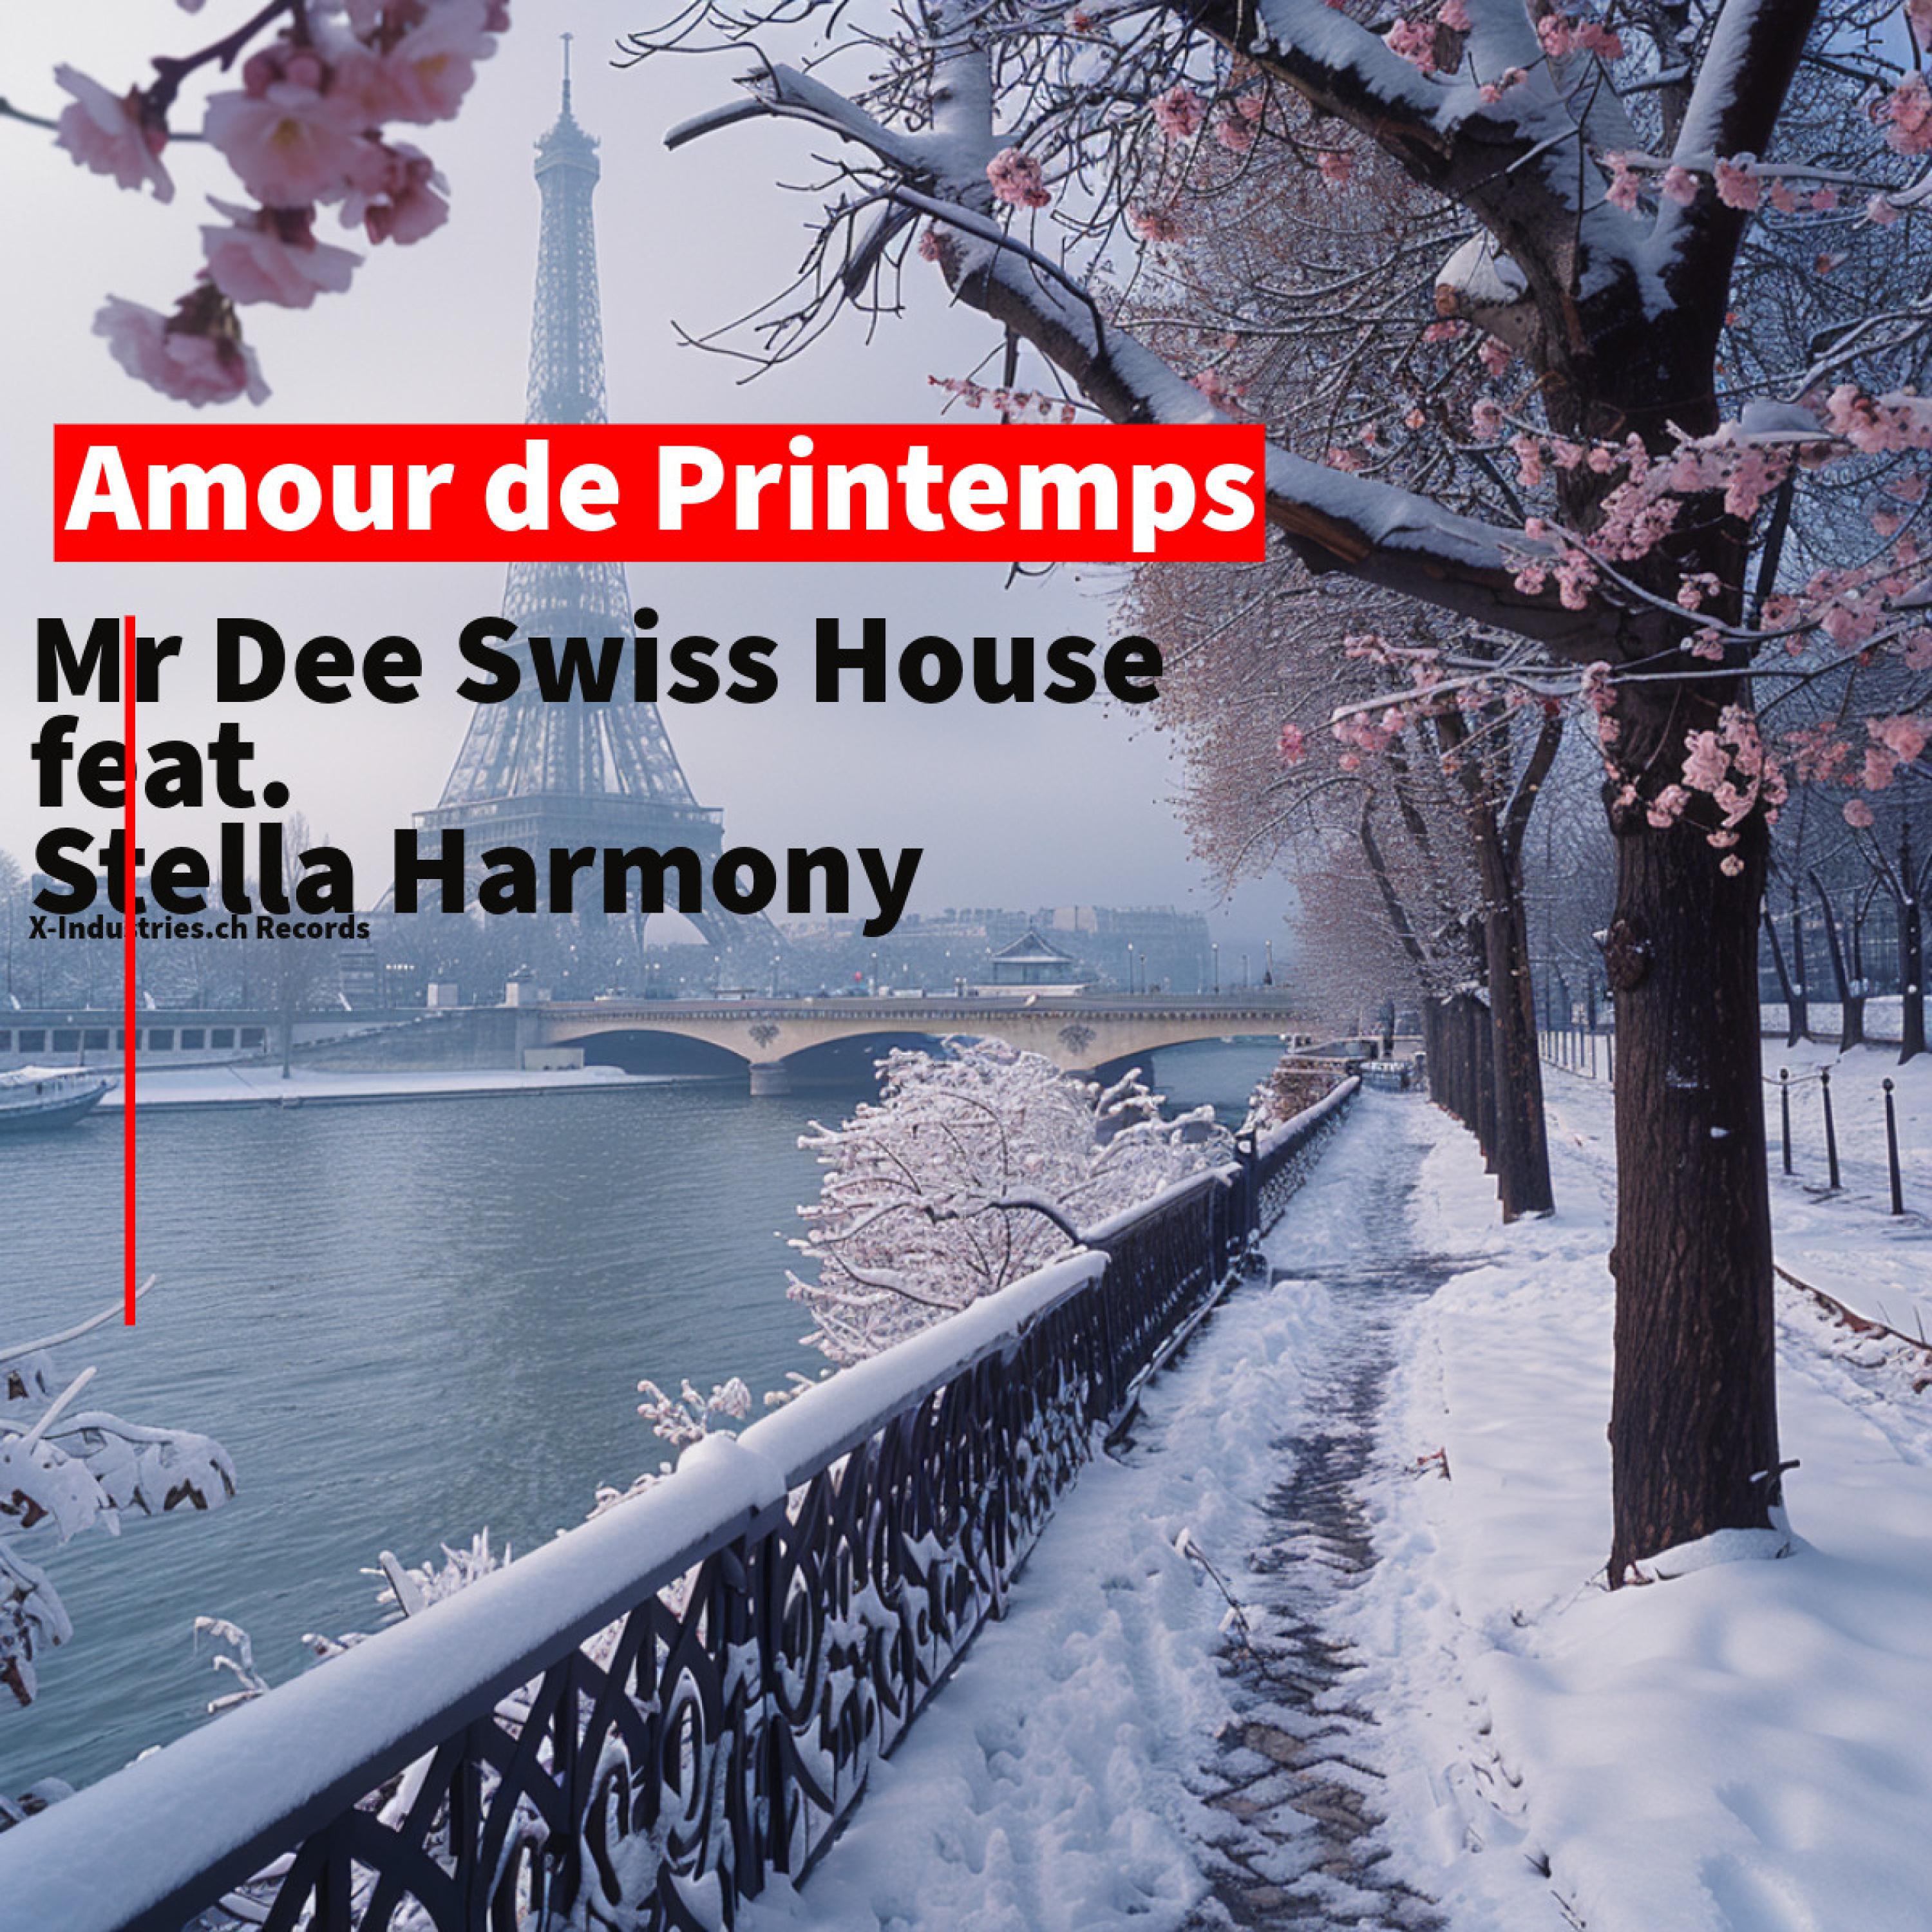 Mr Dee Swiss House - Amour de Printemps (feat. Stella Harmony) (Radio Edit)